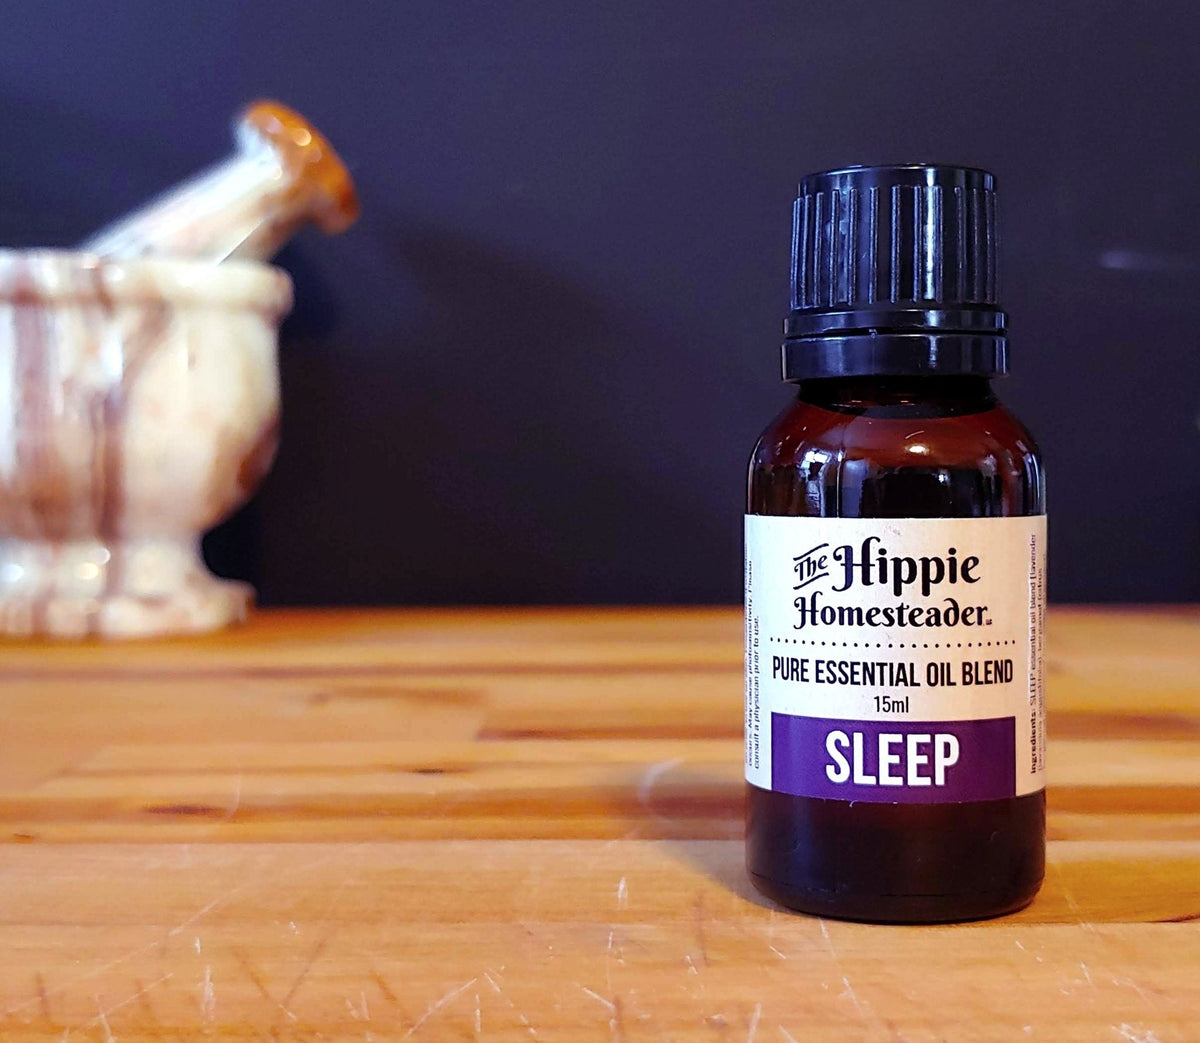 SLEEP Pure Essential Oil Blend by The Hippie Homesteader, LLC